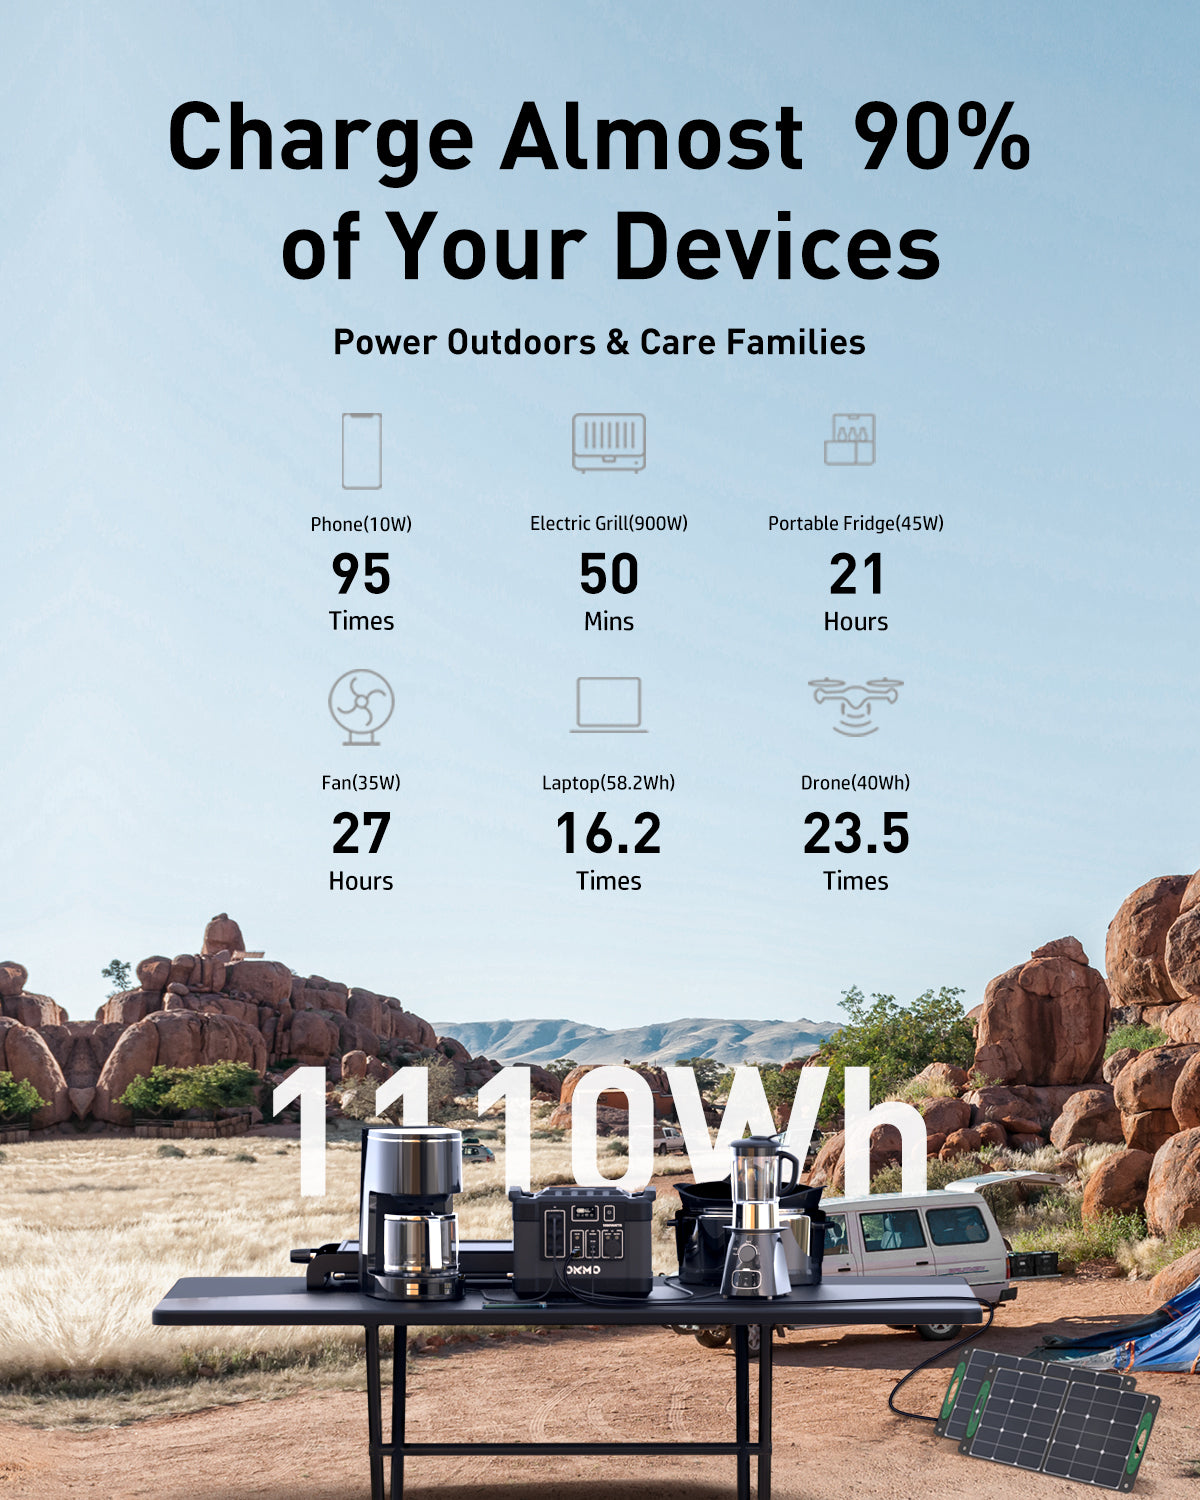 Portable Power Station 1000W 300000mAh 1110Wh Backup Battery - OKMO –  OKMOTech